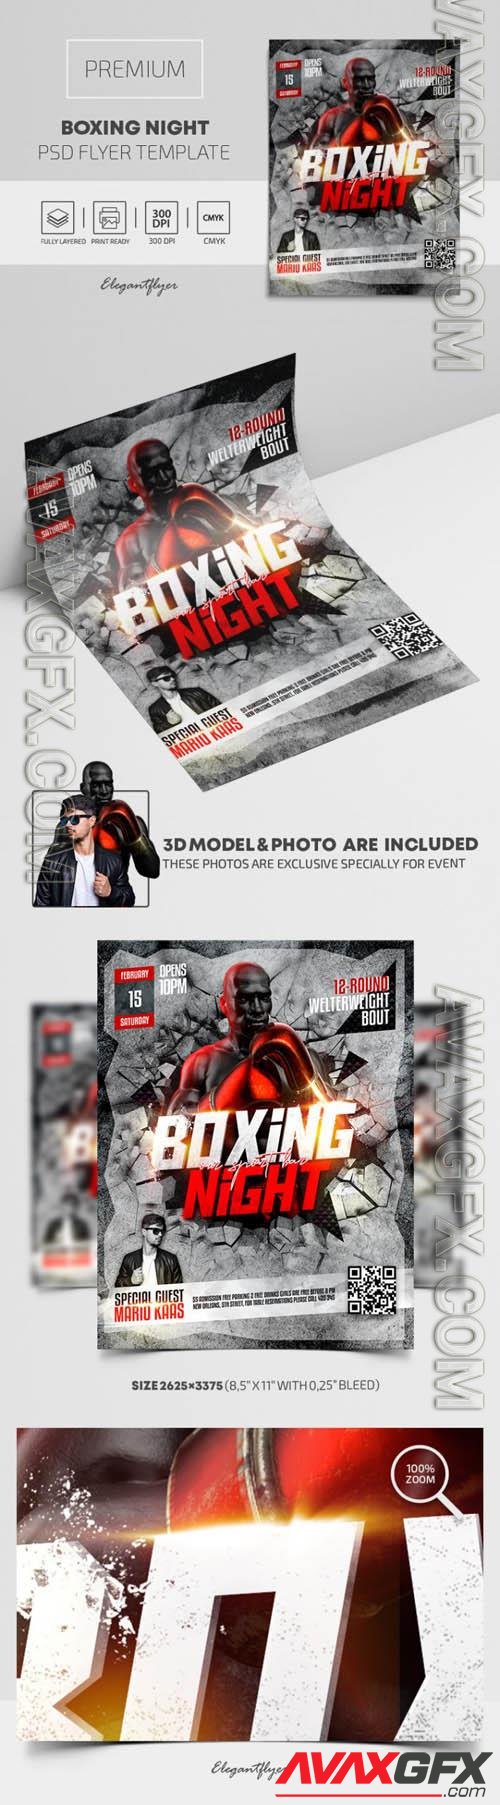 Boxing Night Premium PSD Flyer Template vol 2